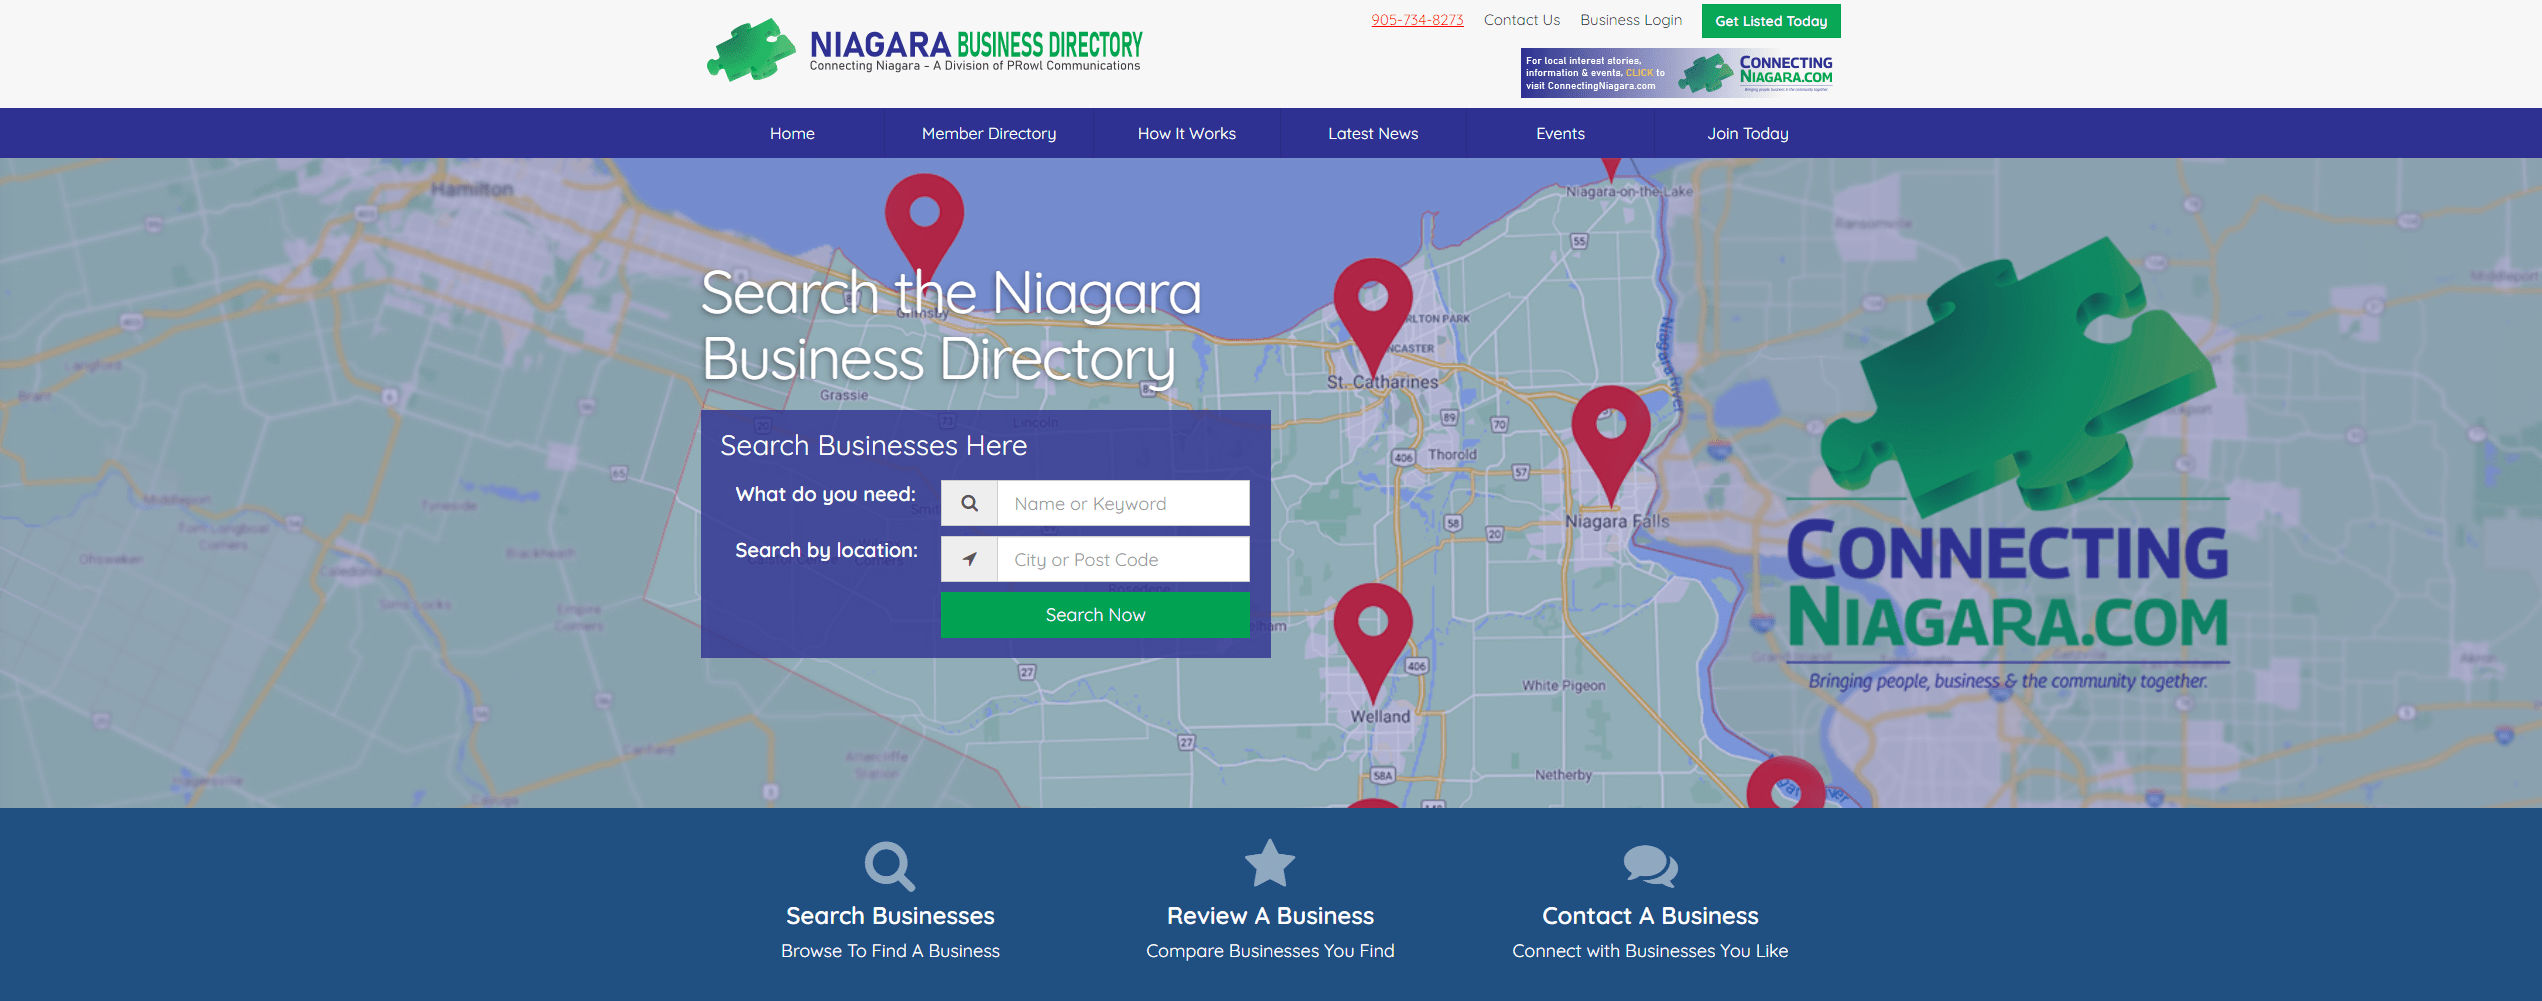 Niagara Business Directory Home Page